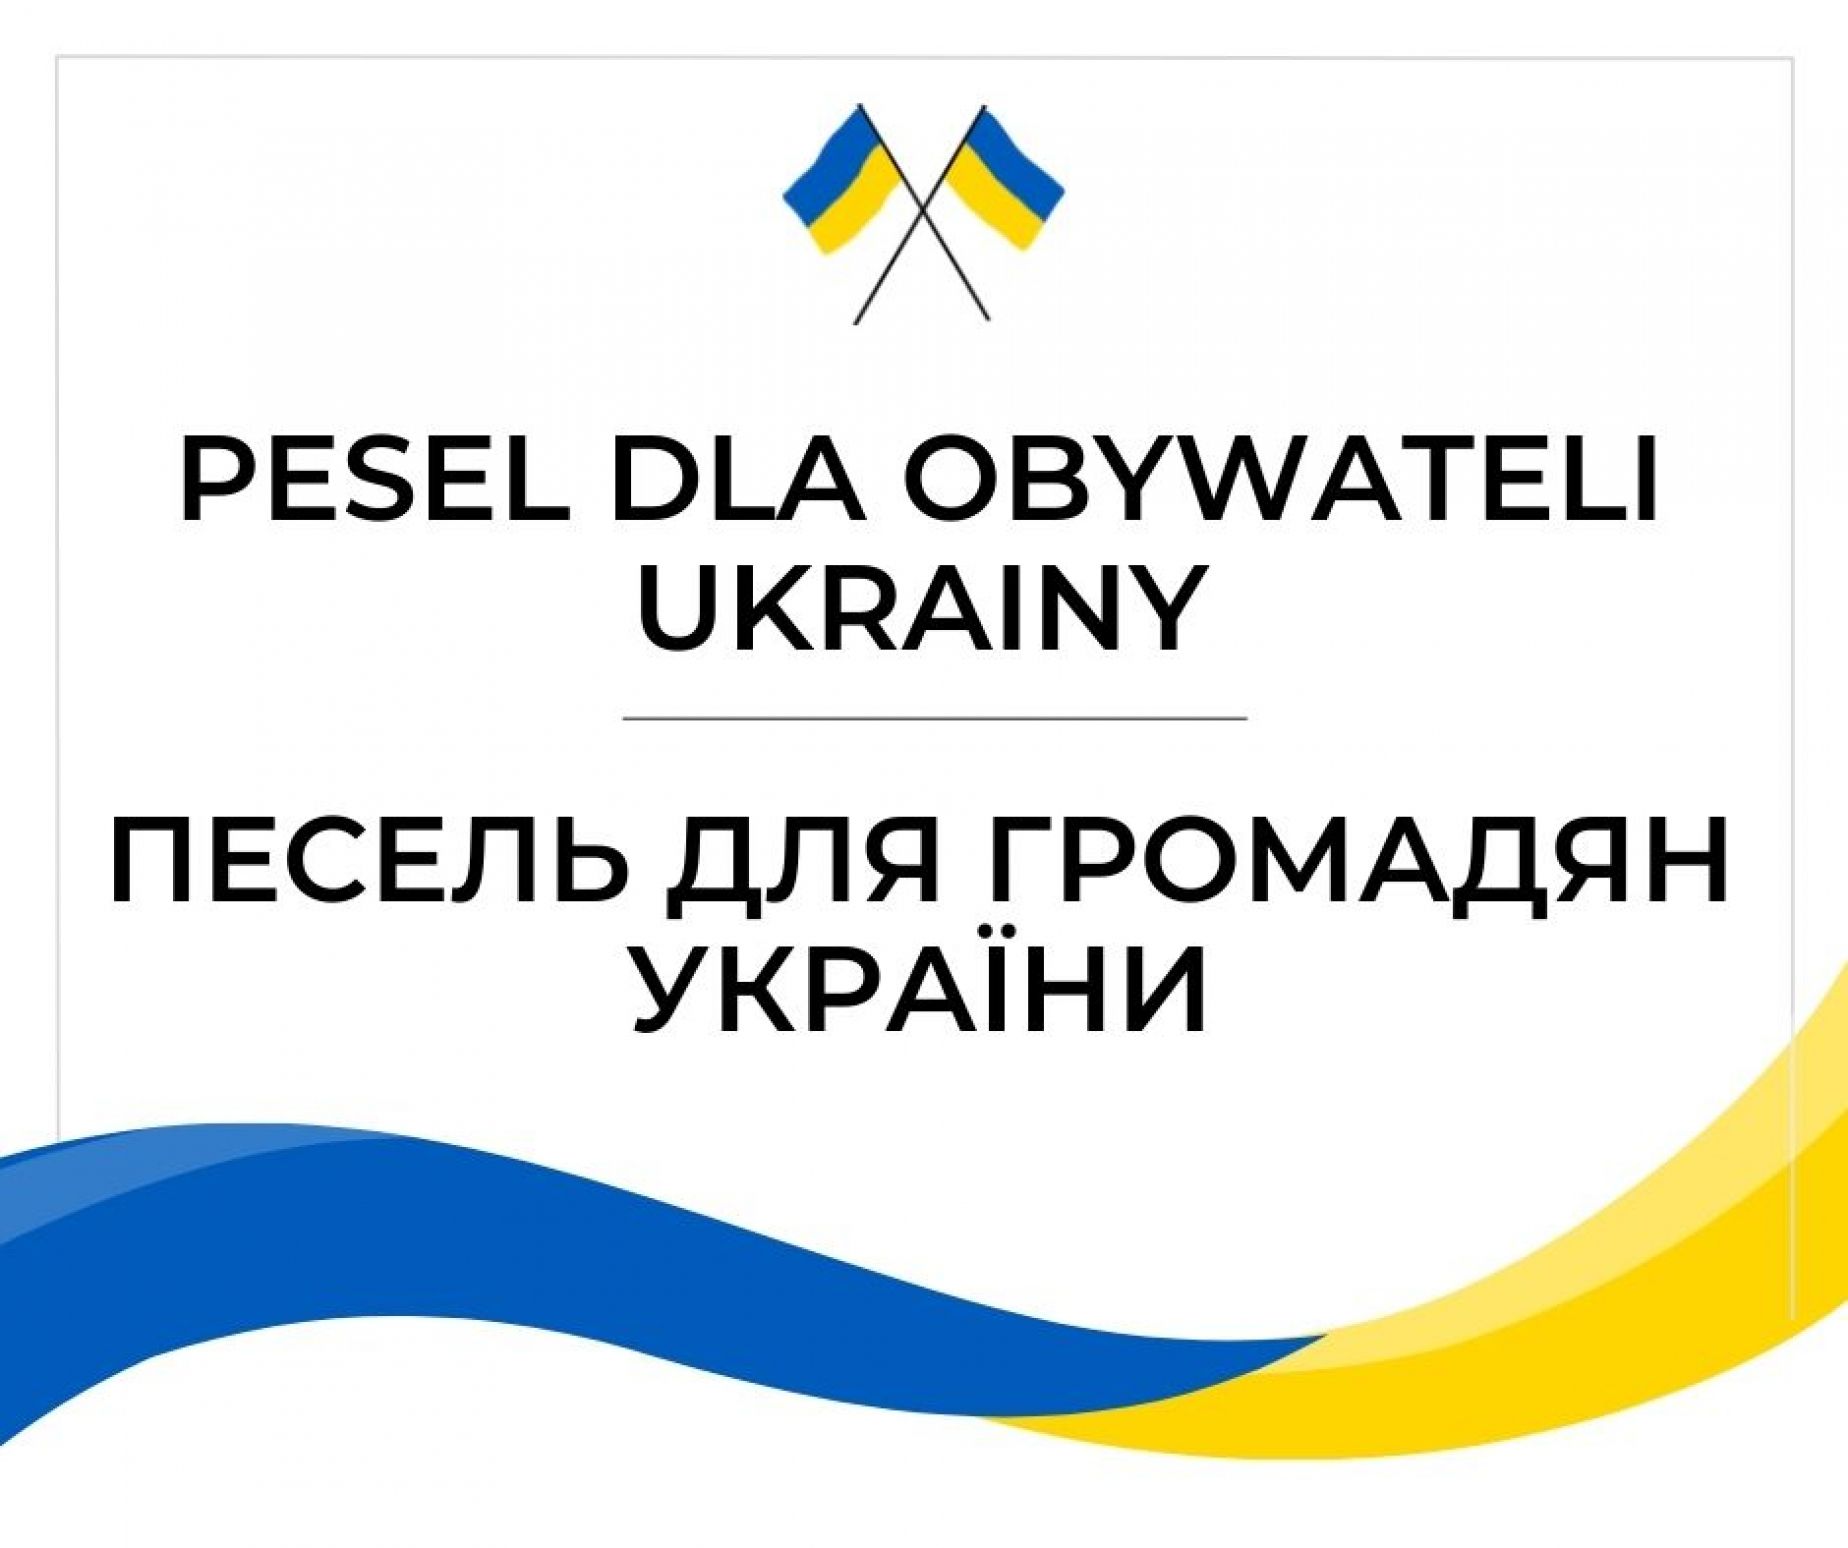 Pesel dla obywateli Ukrainy - Песель для громадян України